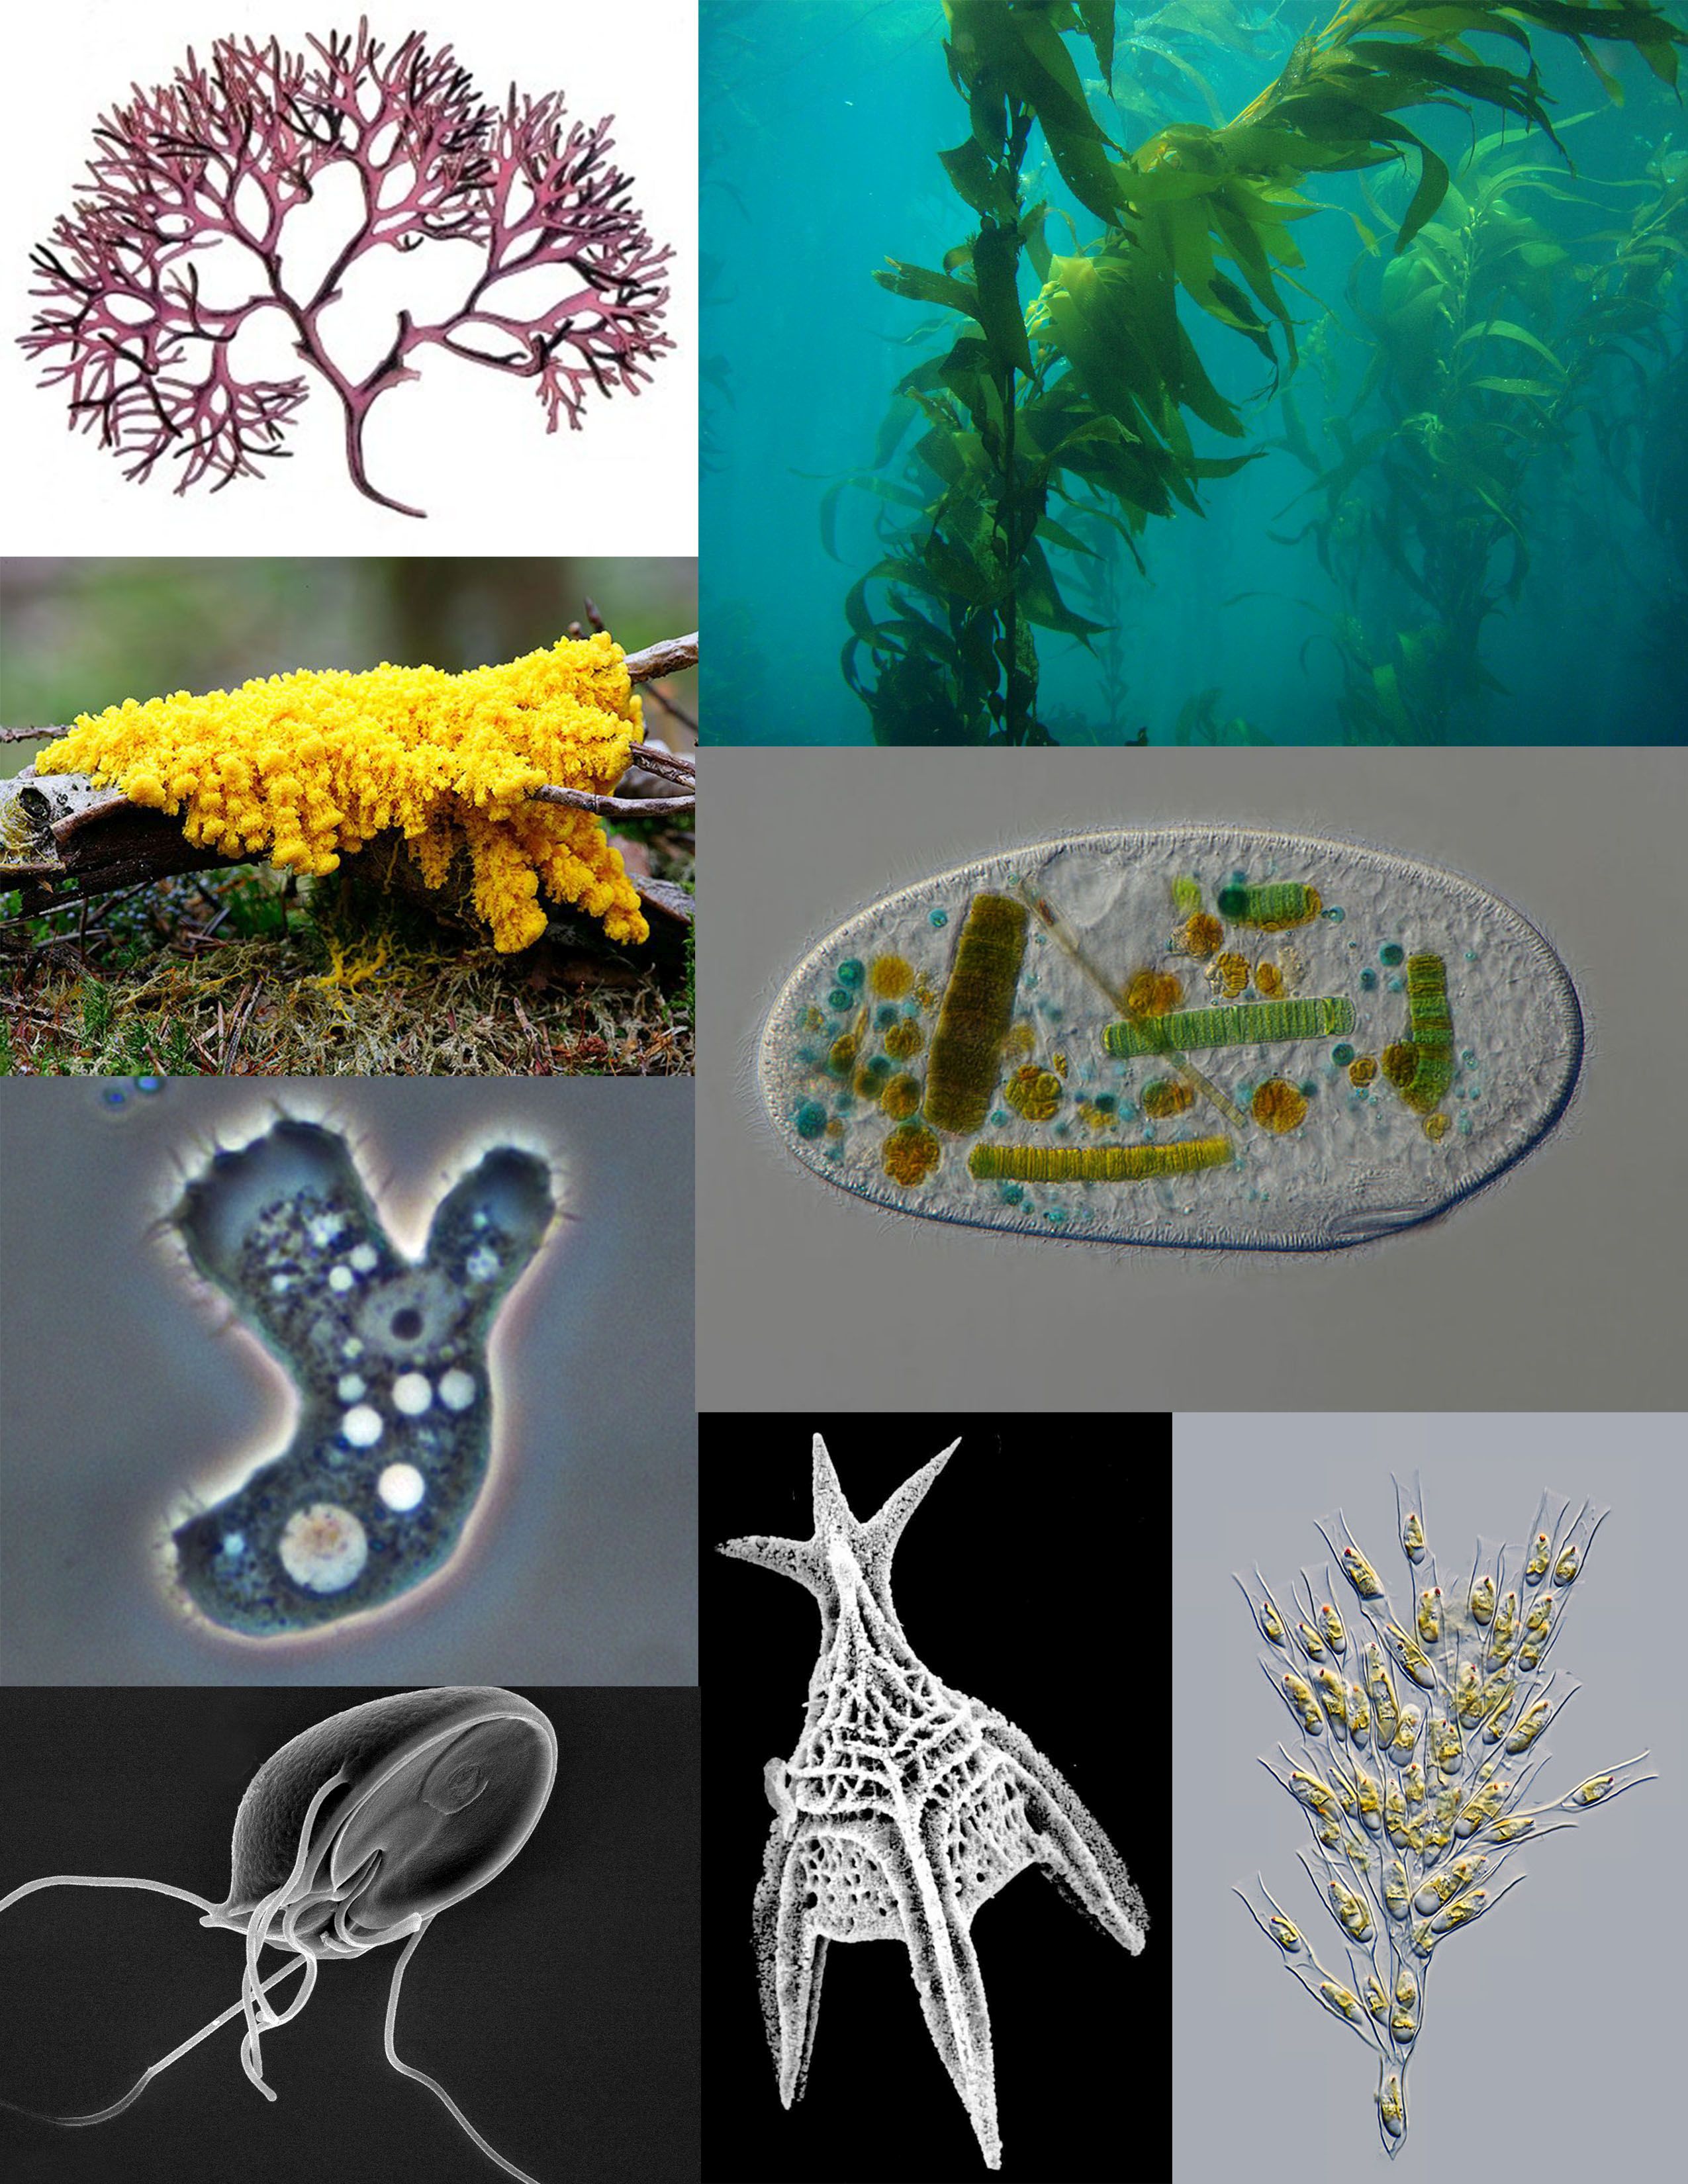 A sampling of protists: red algae (Chondrus crispus); brown algae (Giant Kelp); ciliate (Frontonia); golden algae (Dinobryon); Foraminifera (Radiolaria); parasitic flagellate (Giardia muris); pathogenic amoeba (Acanthamoeba); amoebozoan slime mold (Fuligo septica)